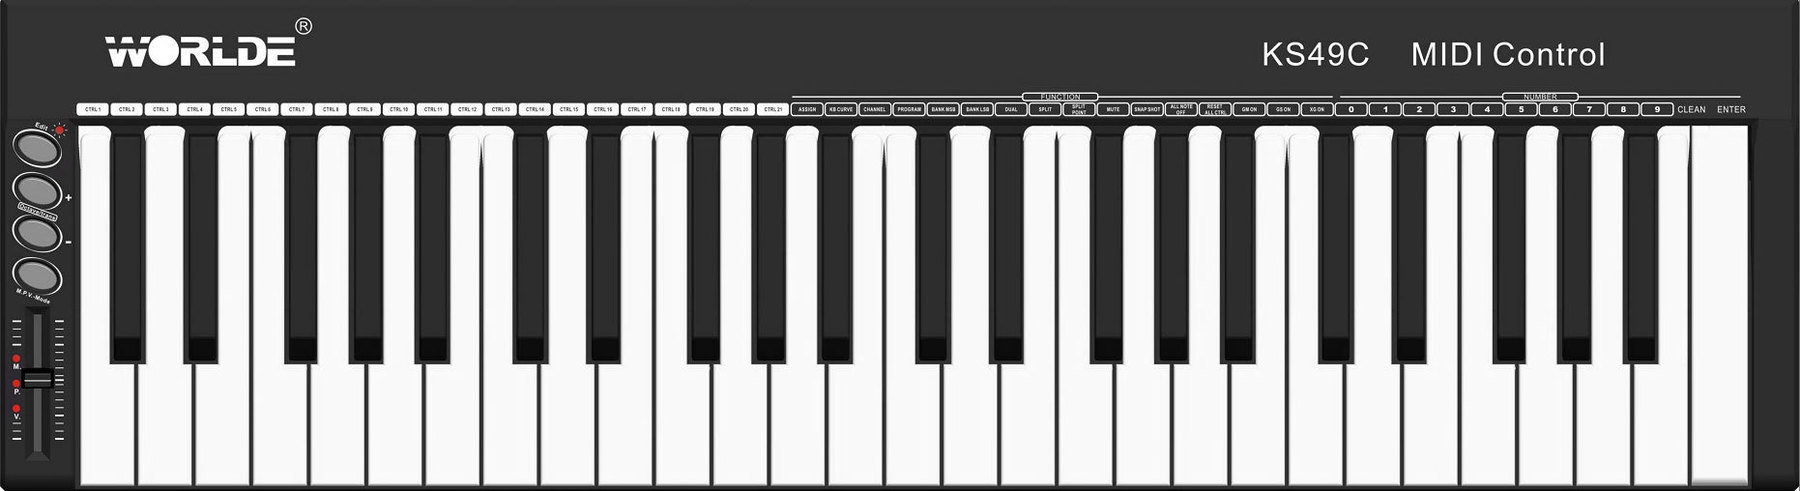 MIDI keyboard Worlde KS49C